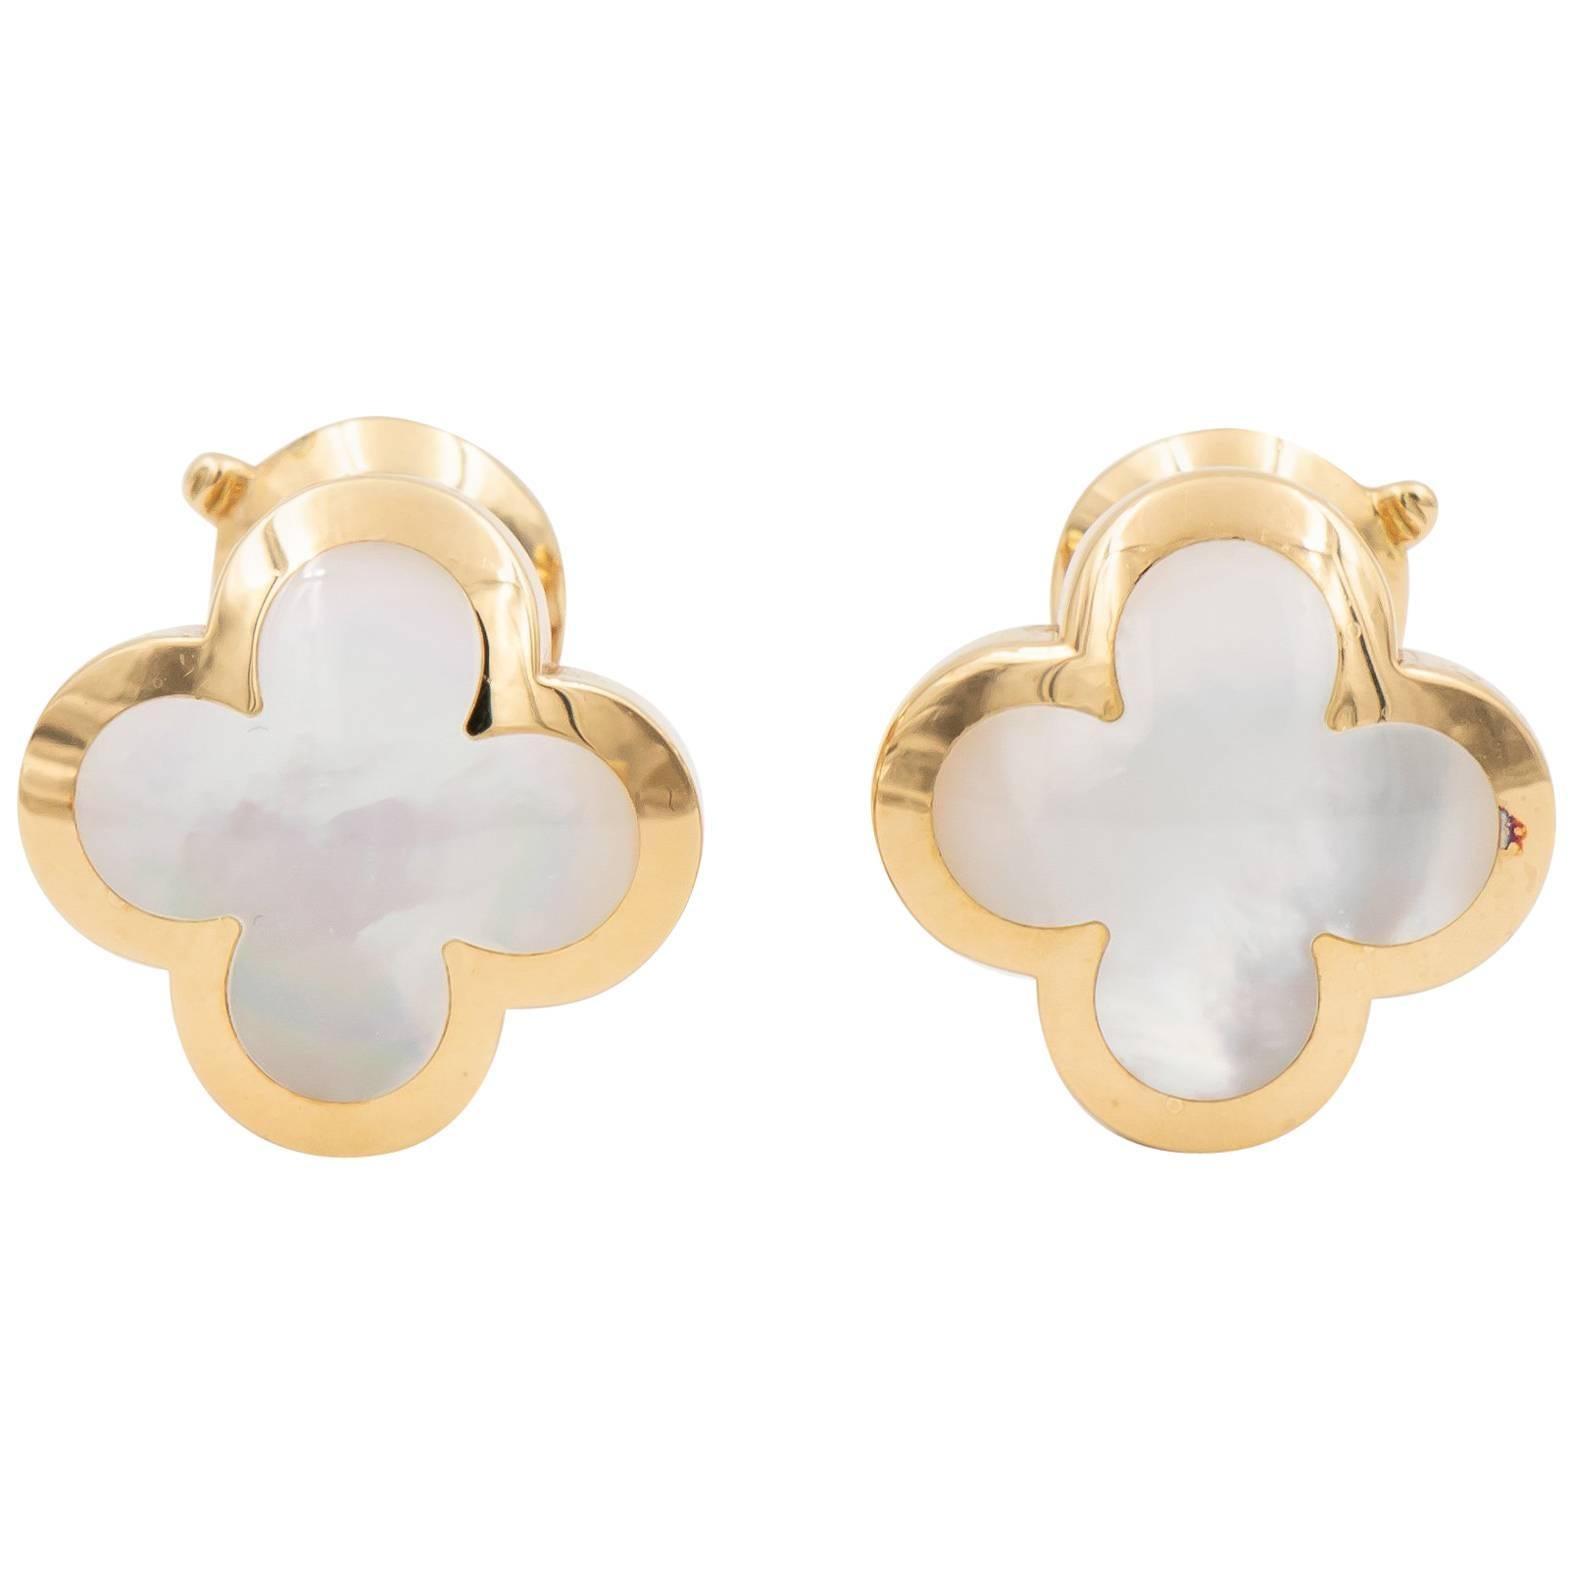 Van Cleef & Arpels Pure Alhambra Earrings, 18 Karat Gold and Mother-of-Pearl